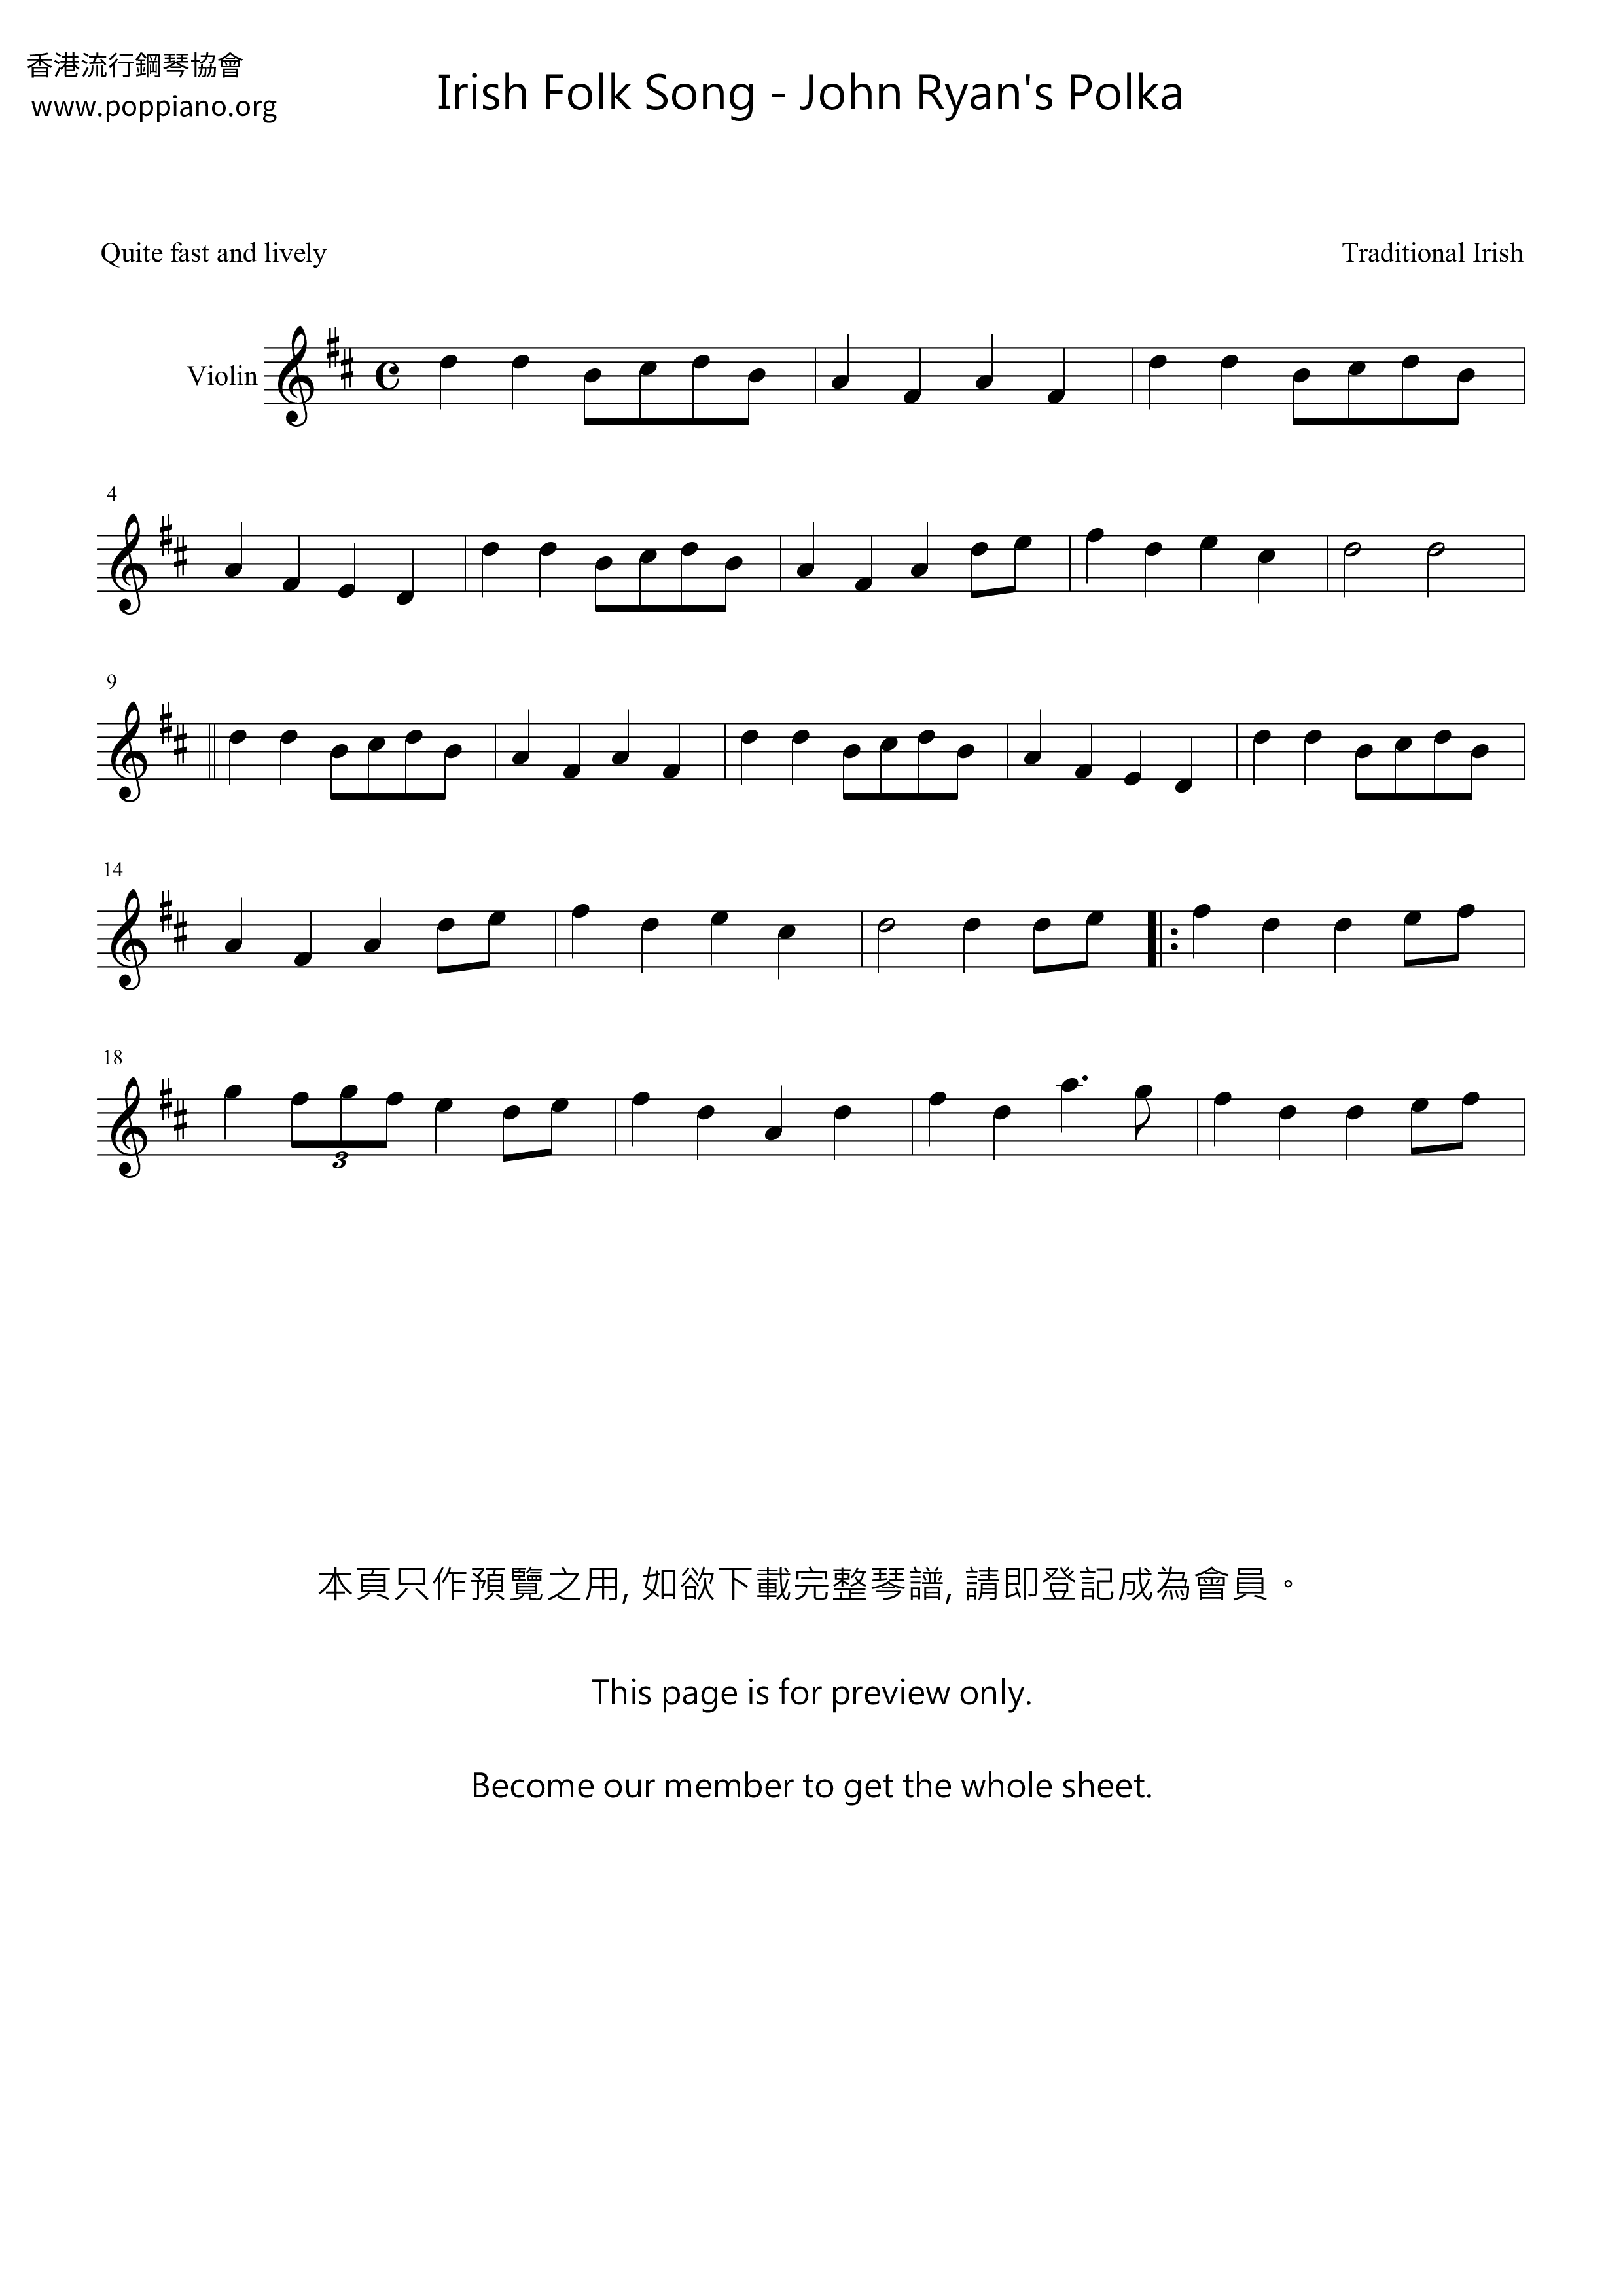 John Ryan's Polkaピアノ譜